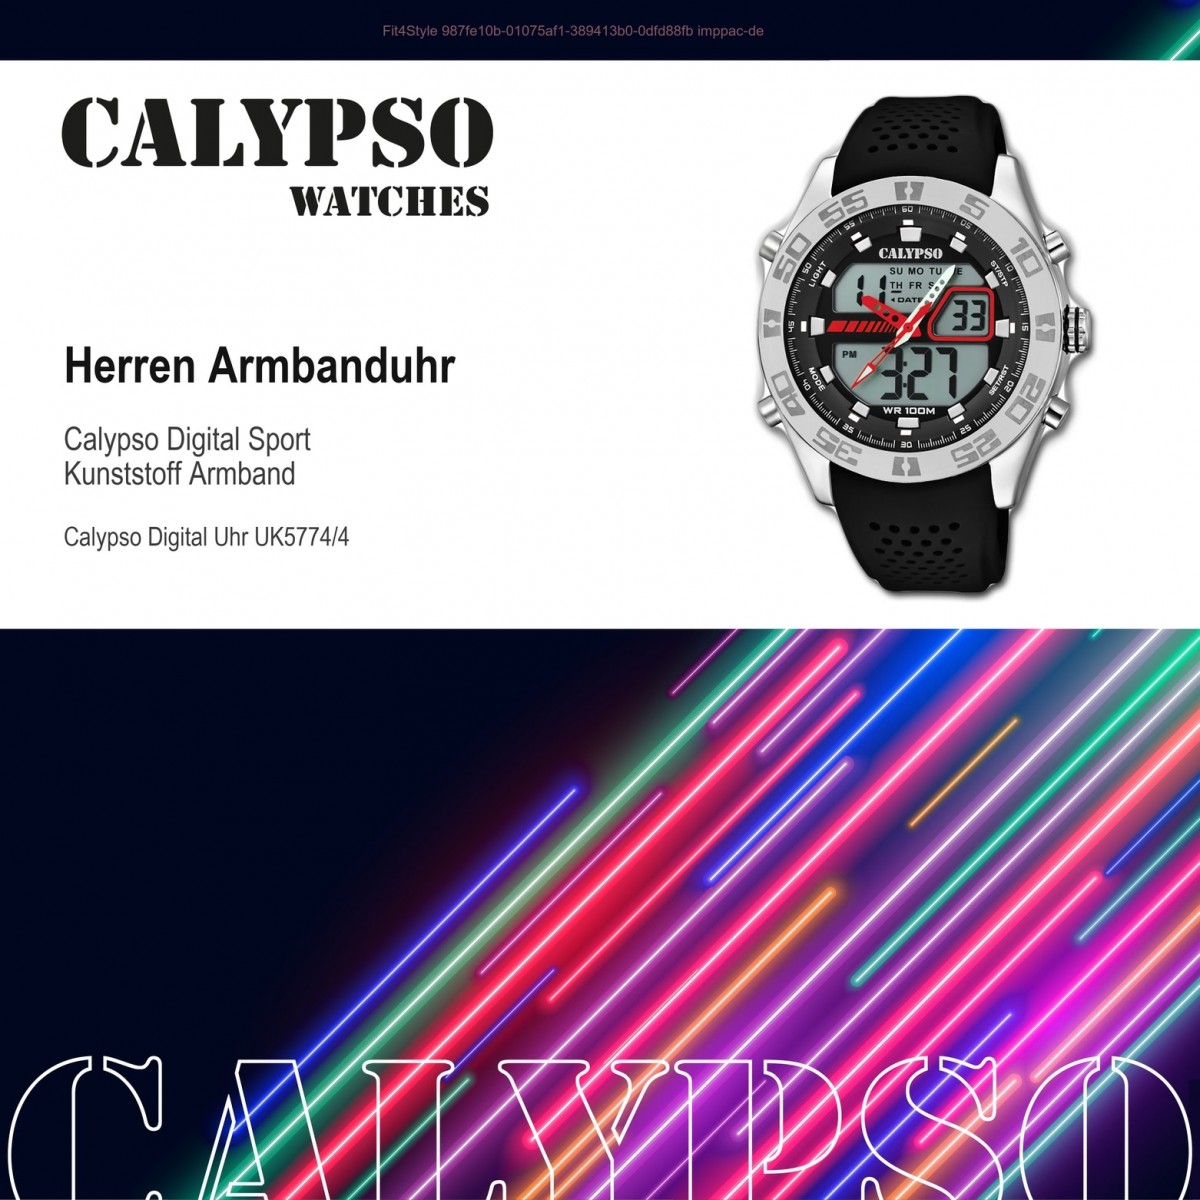 UK5774/4 Quarz-Uhr Calypso Herren Armbanduhr K5774/4 Street PU schwarz Style